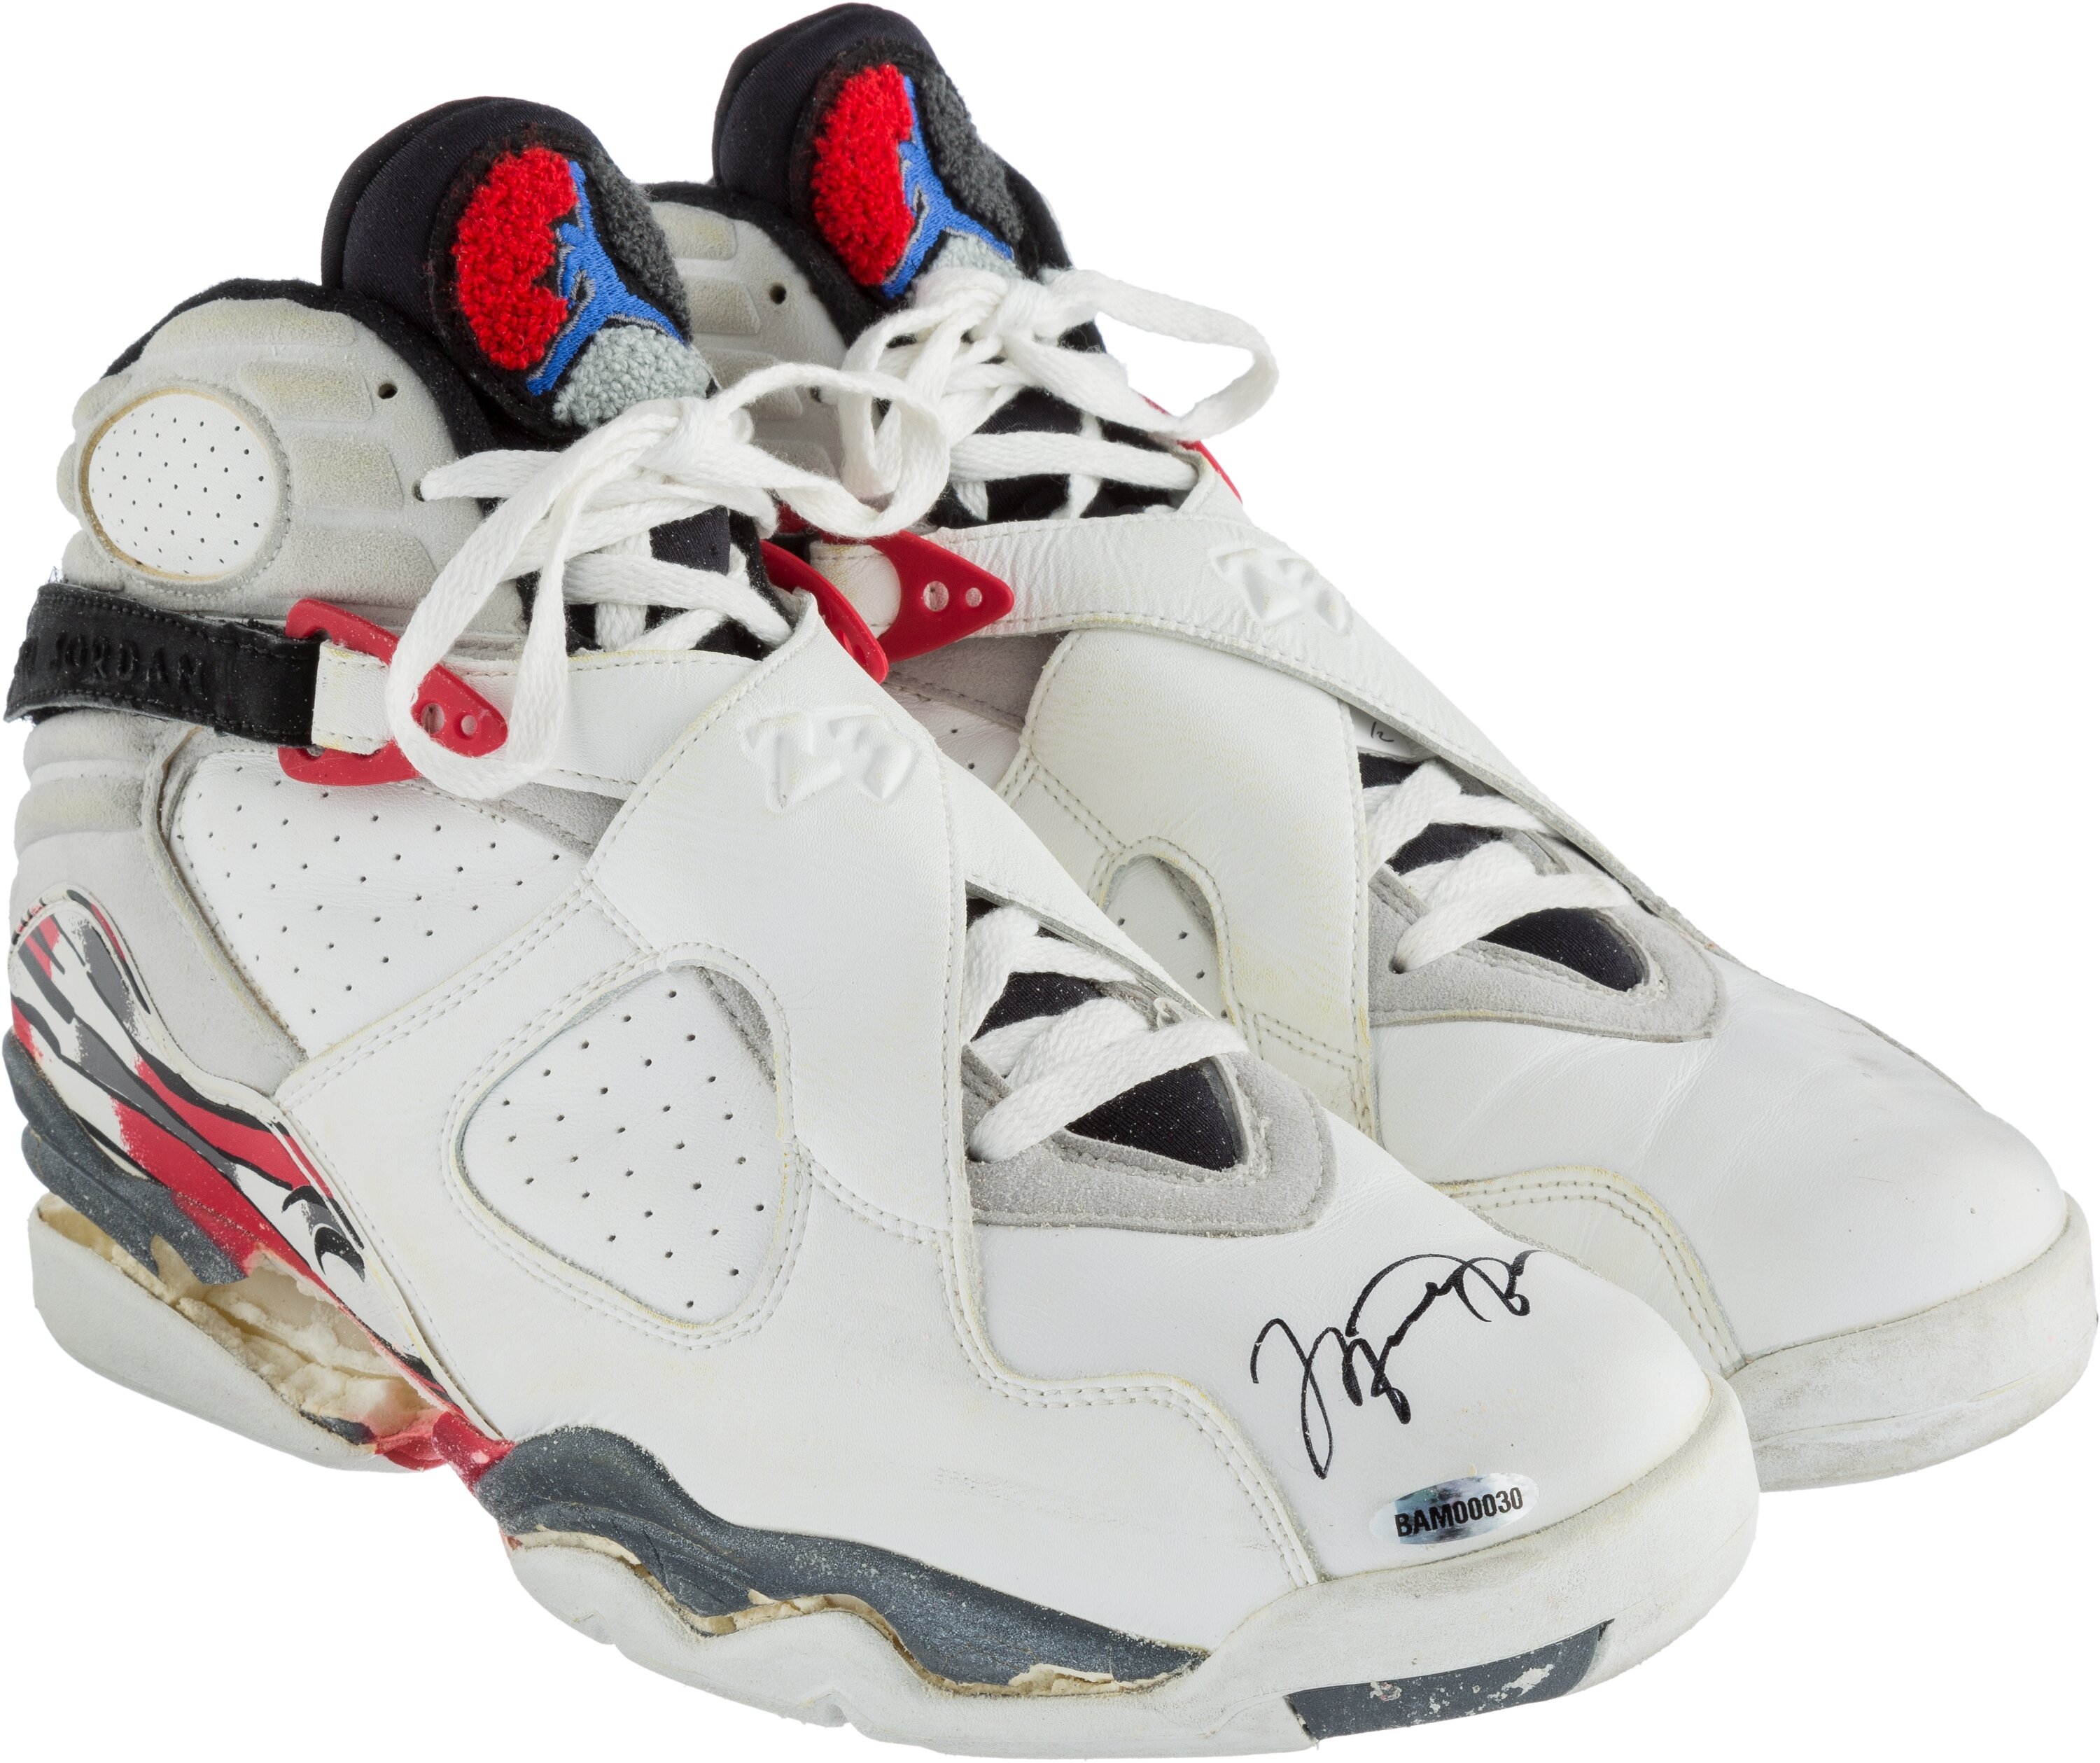 Michael Jordan Signed Pair of Air Jordan Basketball Shoes with Display Case  (Beckett & UDA)